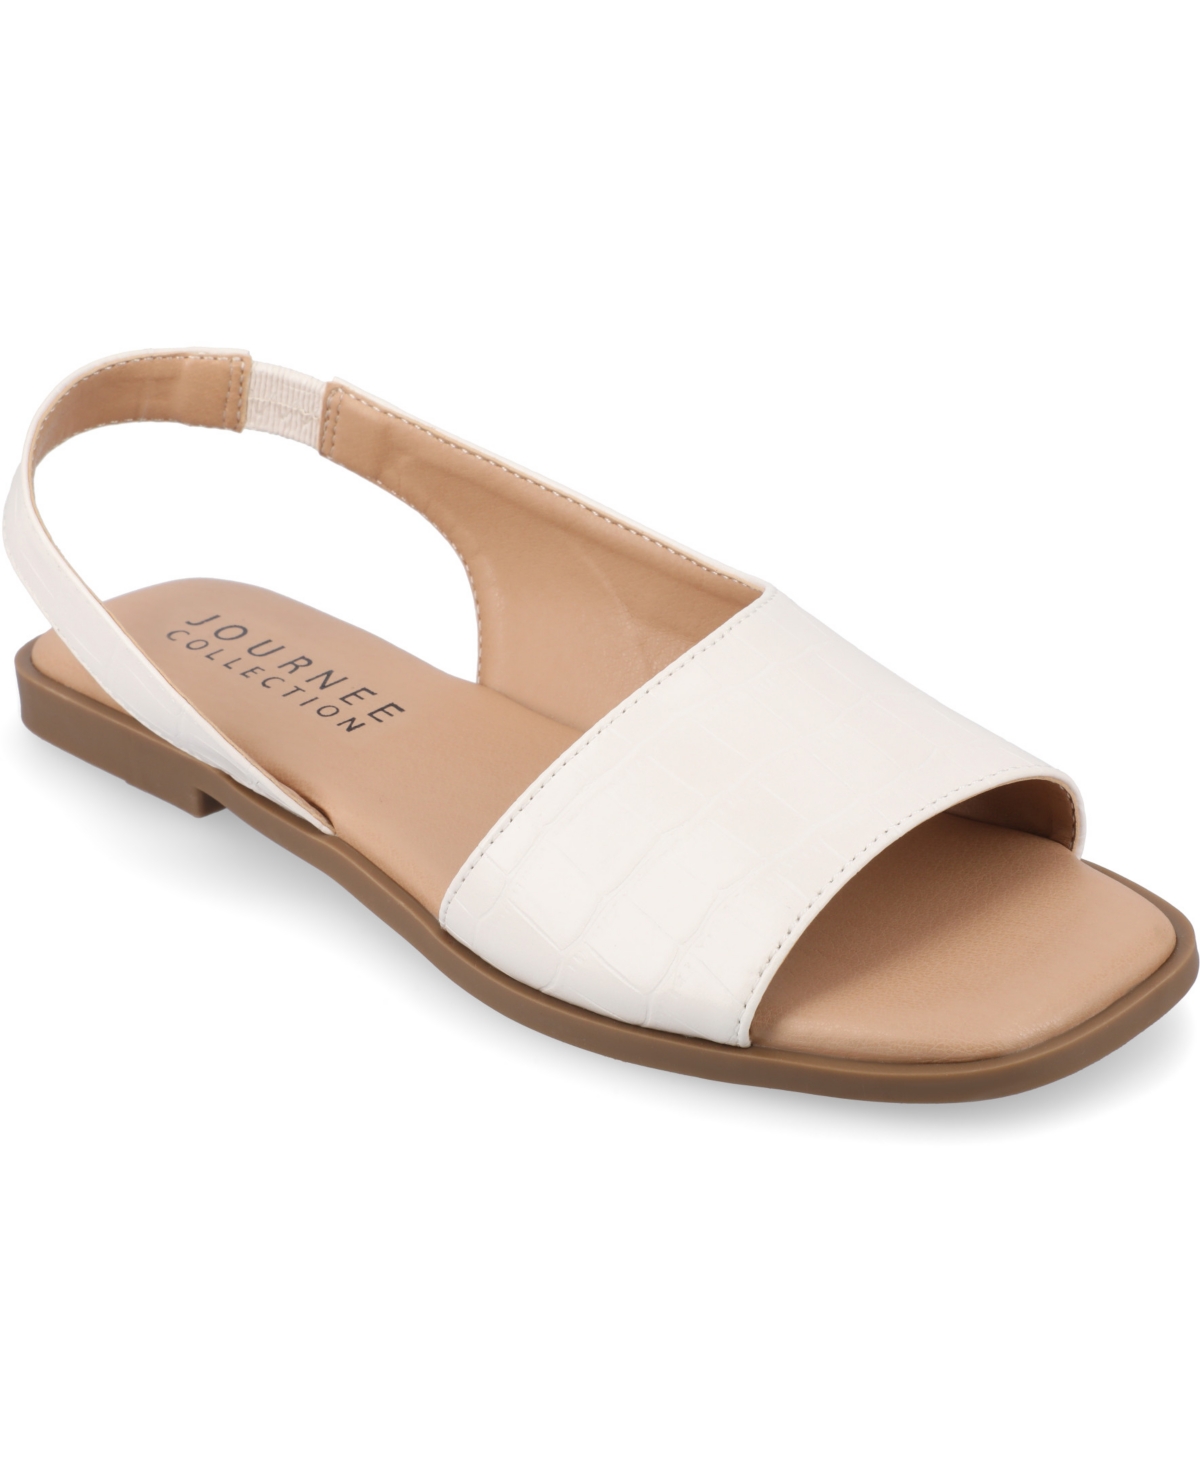 Women's Brinsley Teture Slingback Flat Sandals - White